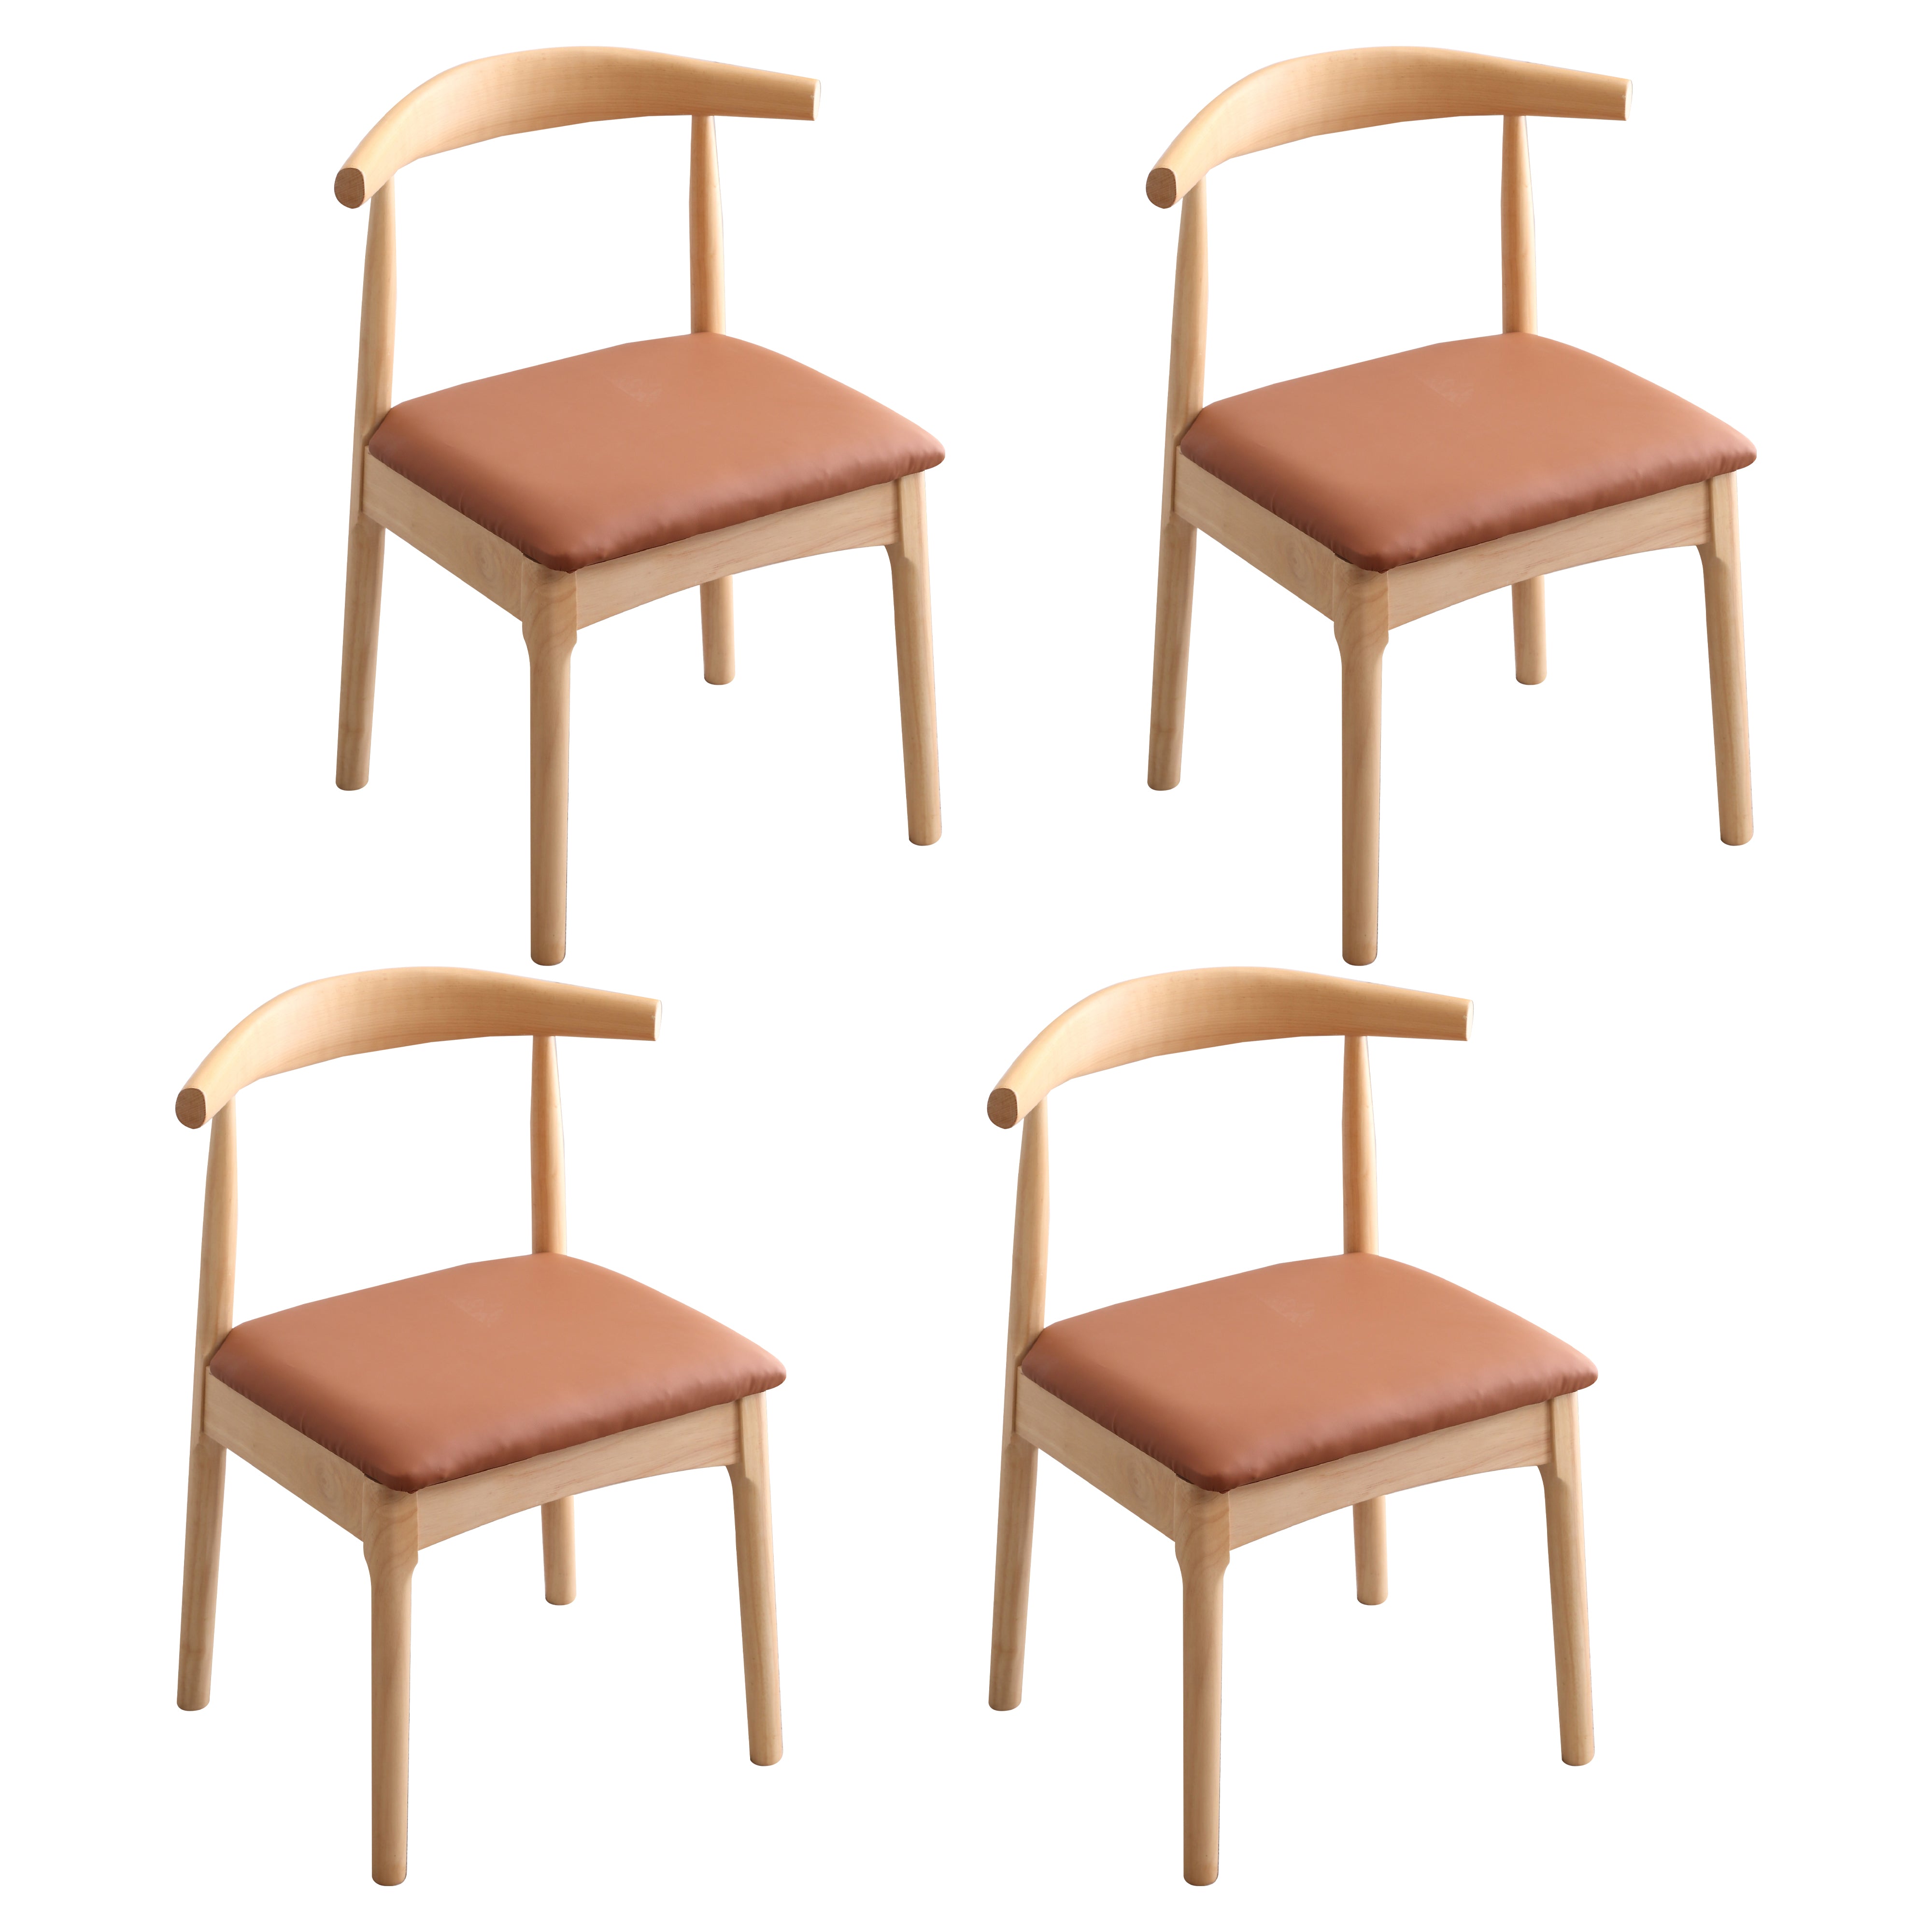 Innenskandinavische Seitenstuhl offener gepolsterten Holz Speisesaal Stuhl offen